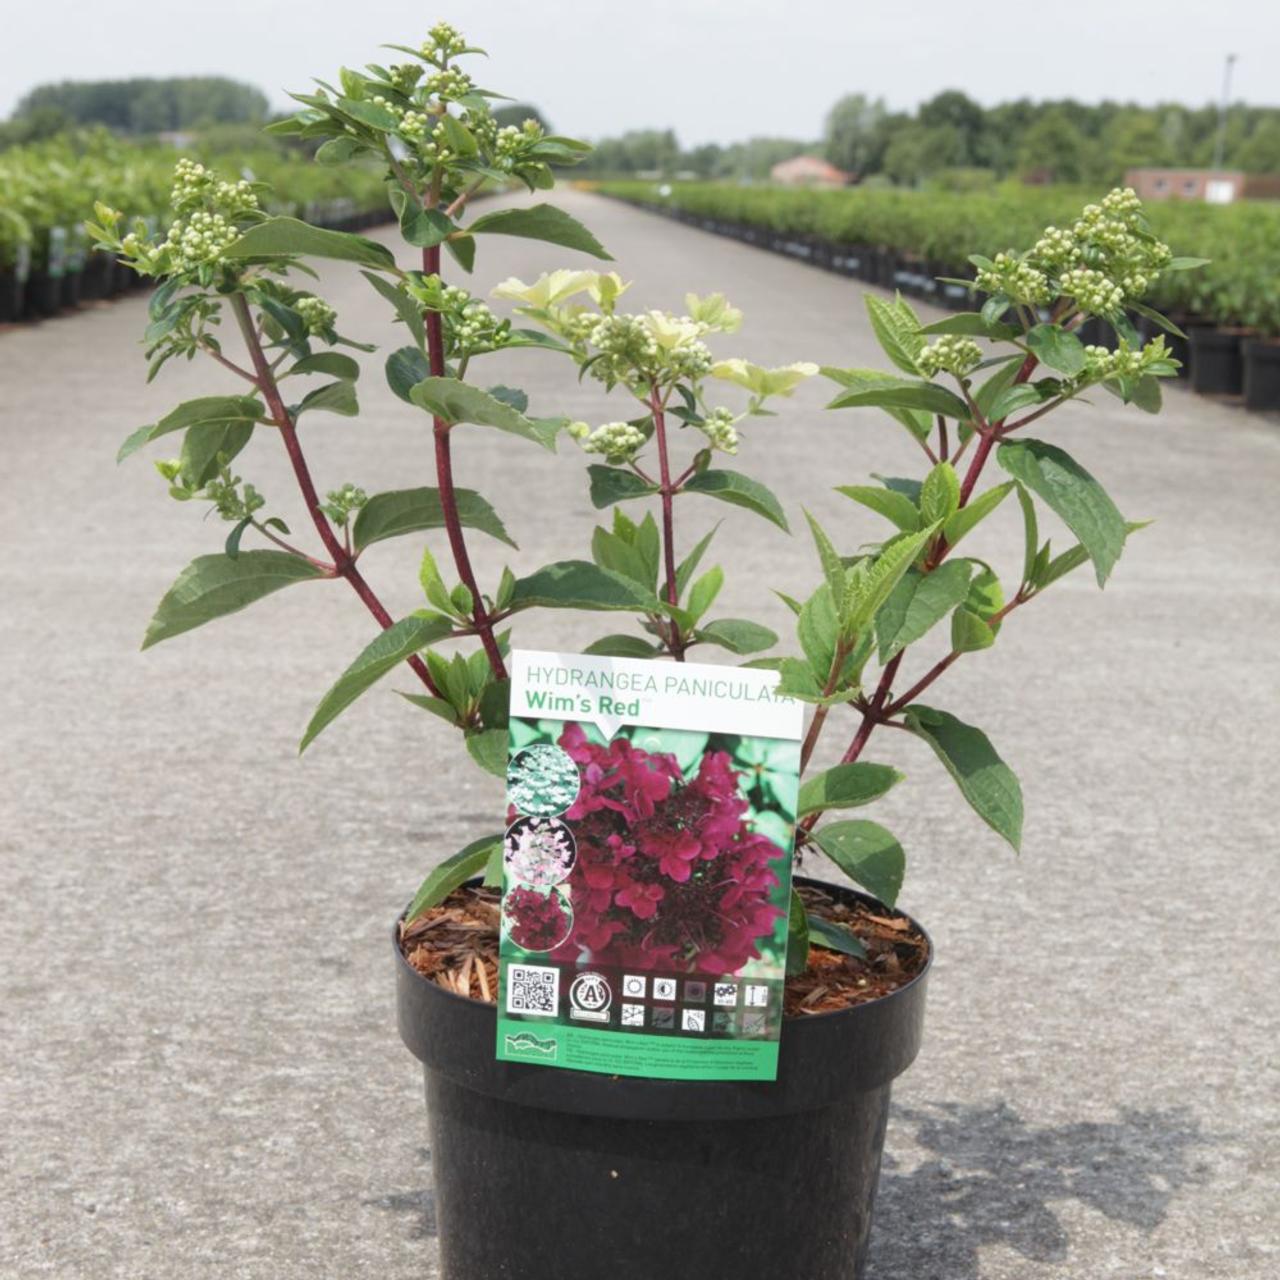 Hydrangea 'Wim's Red' - buy plants at Coolplants